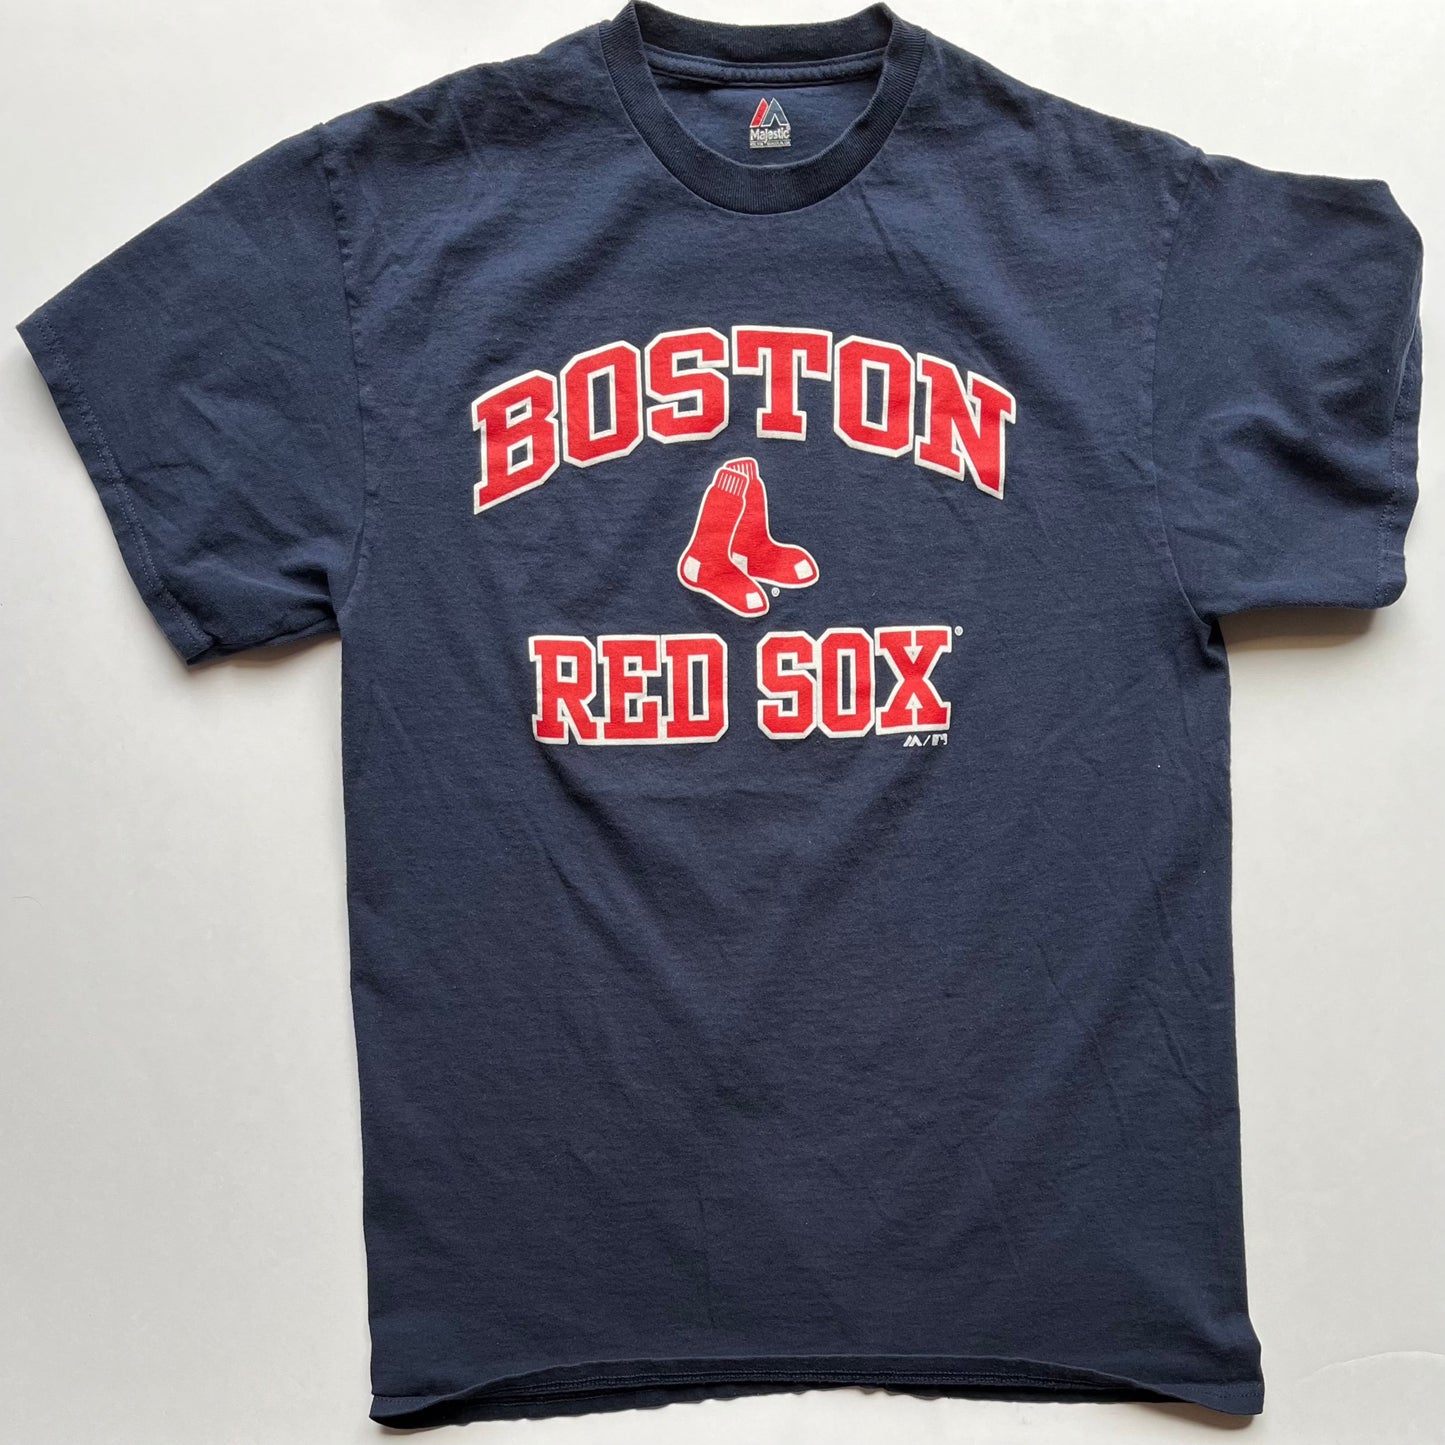 Boston Red Sox - MLB - Majestic Tee (Large)